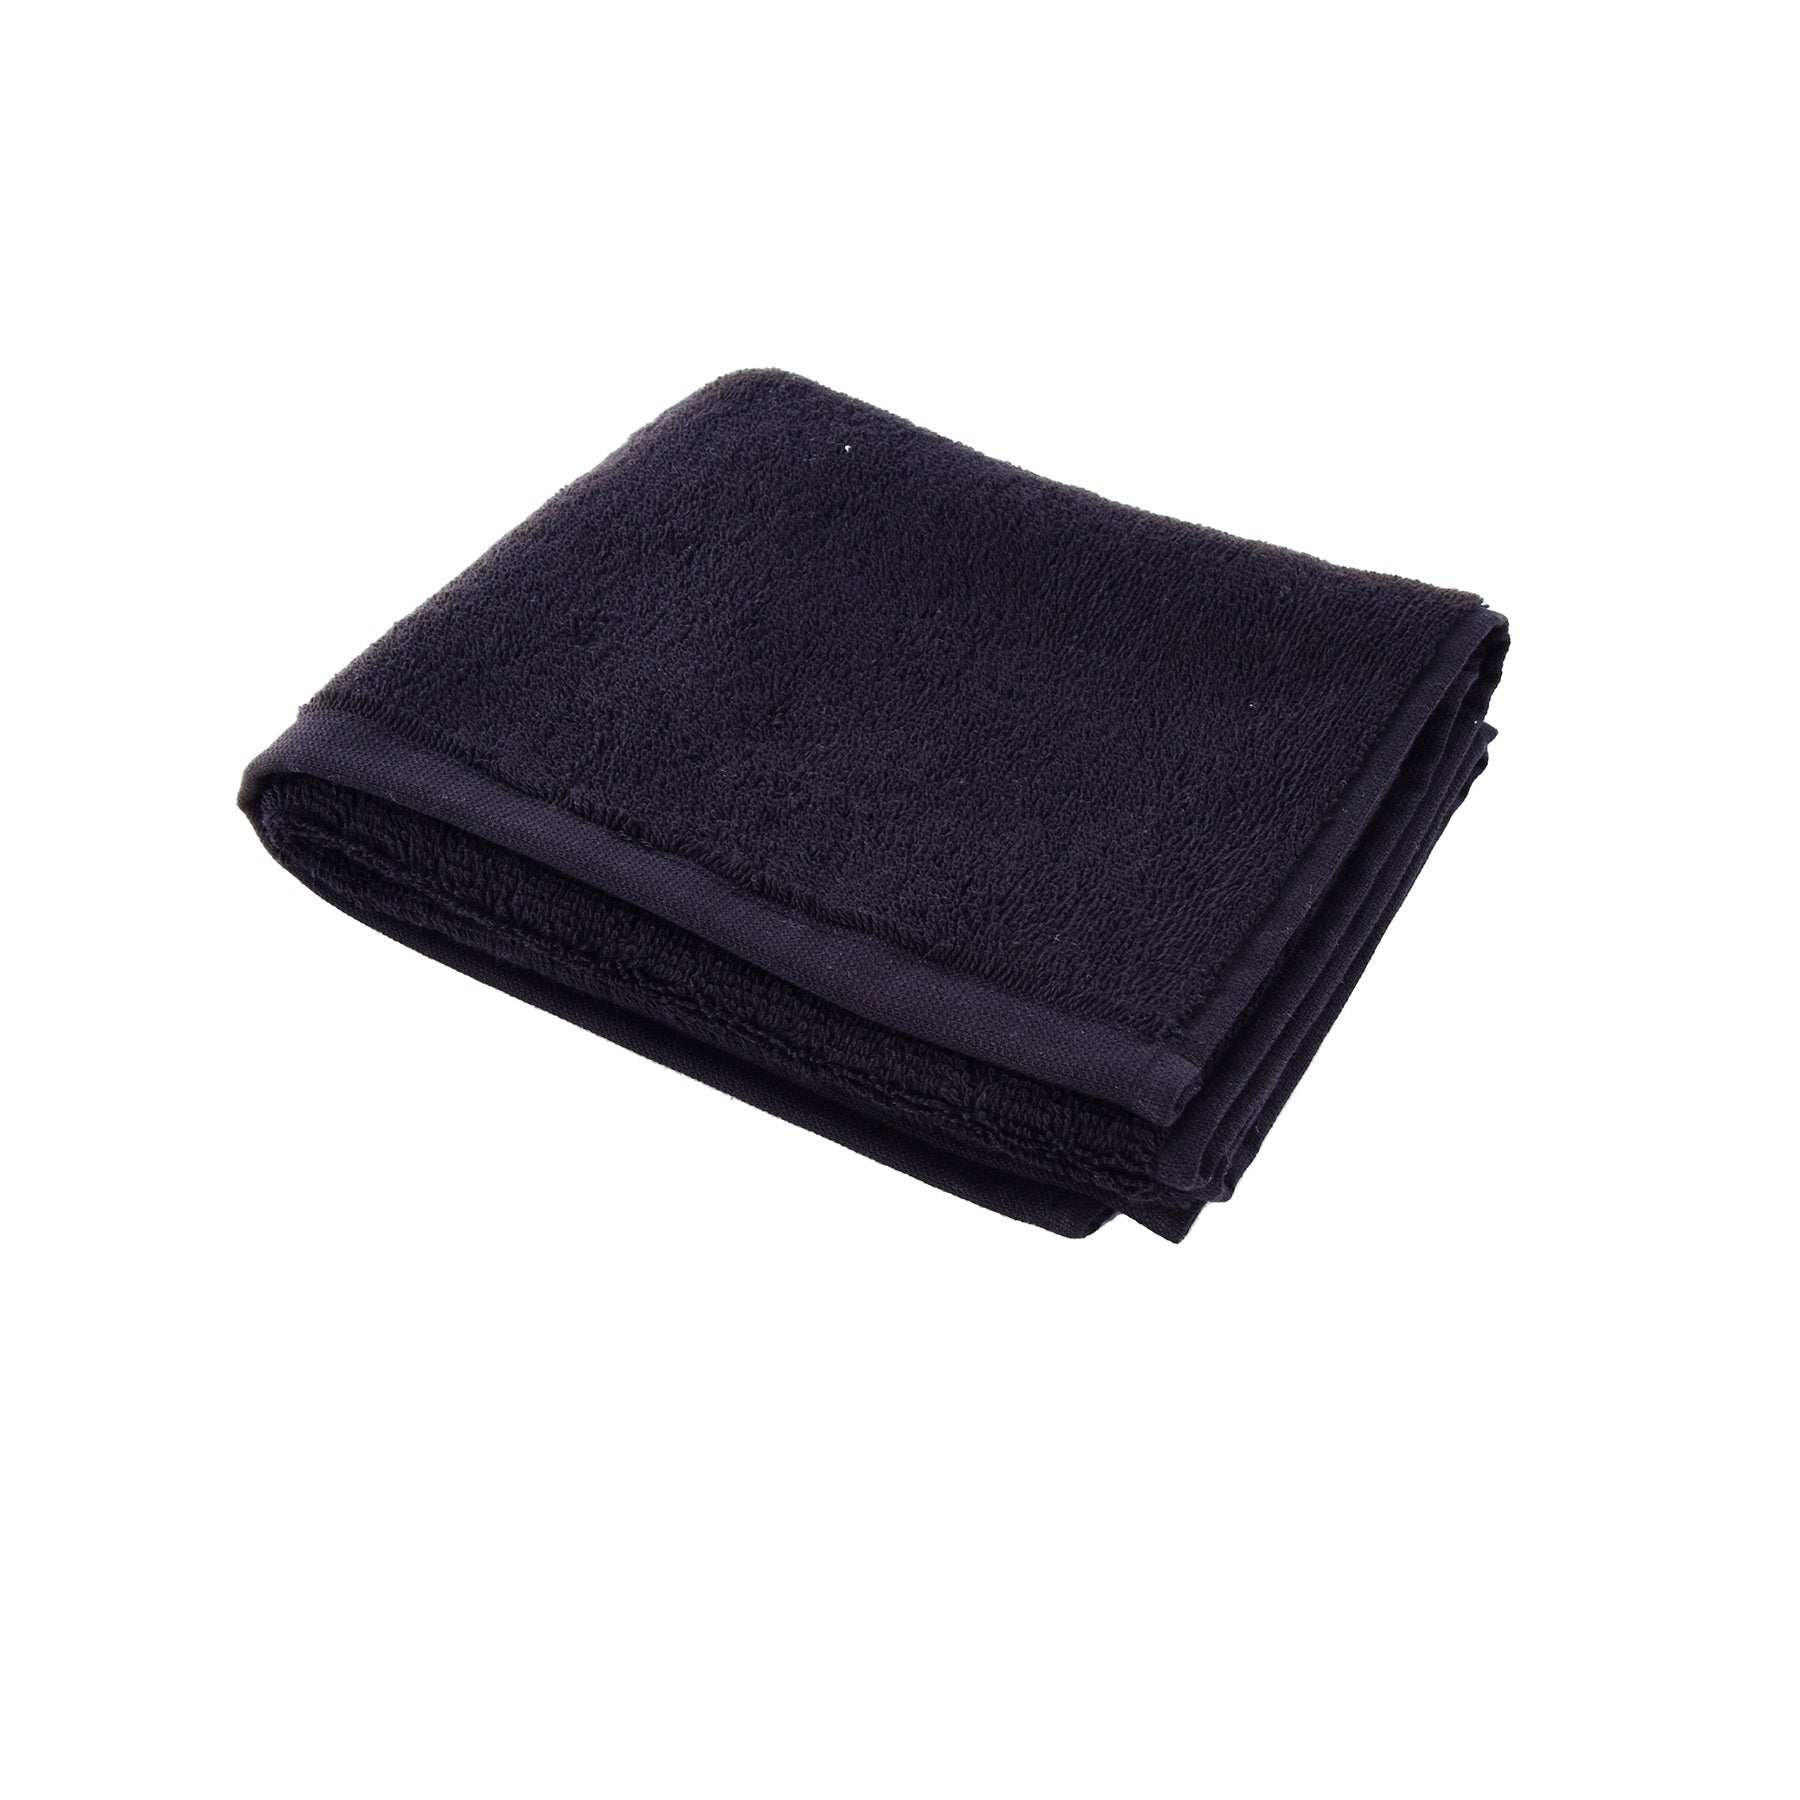 Head towel - BlackSize: 66x41cm.